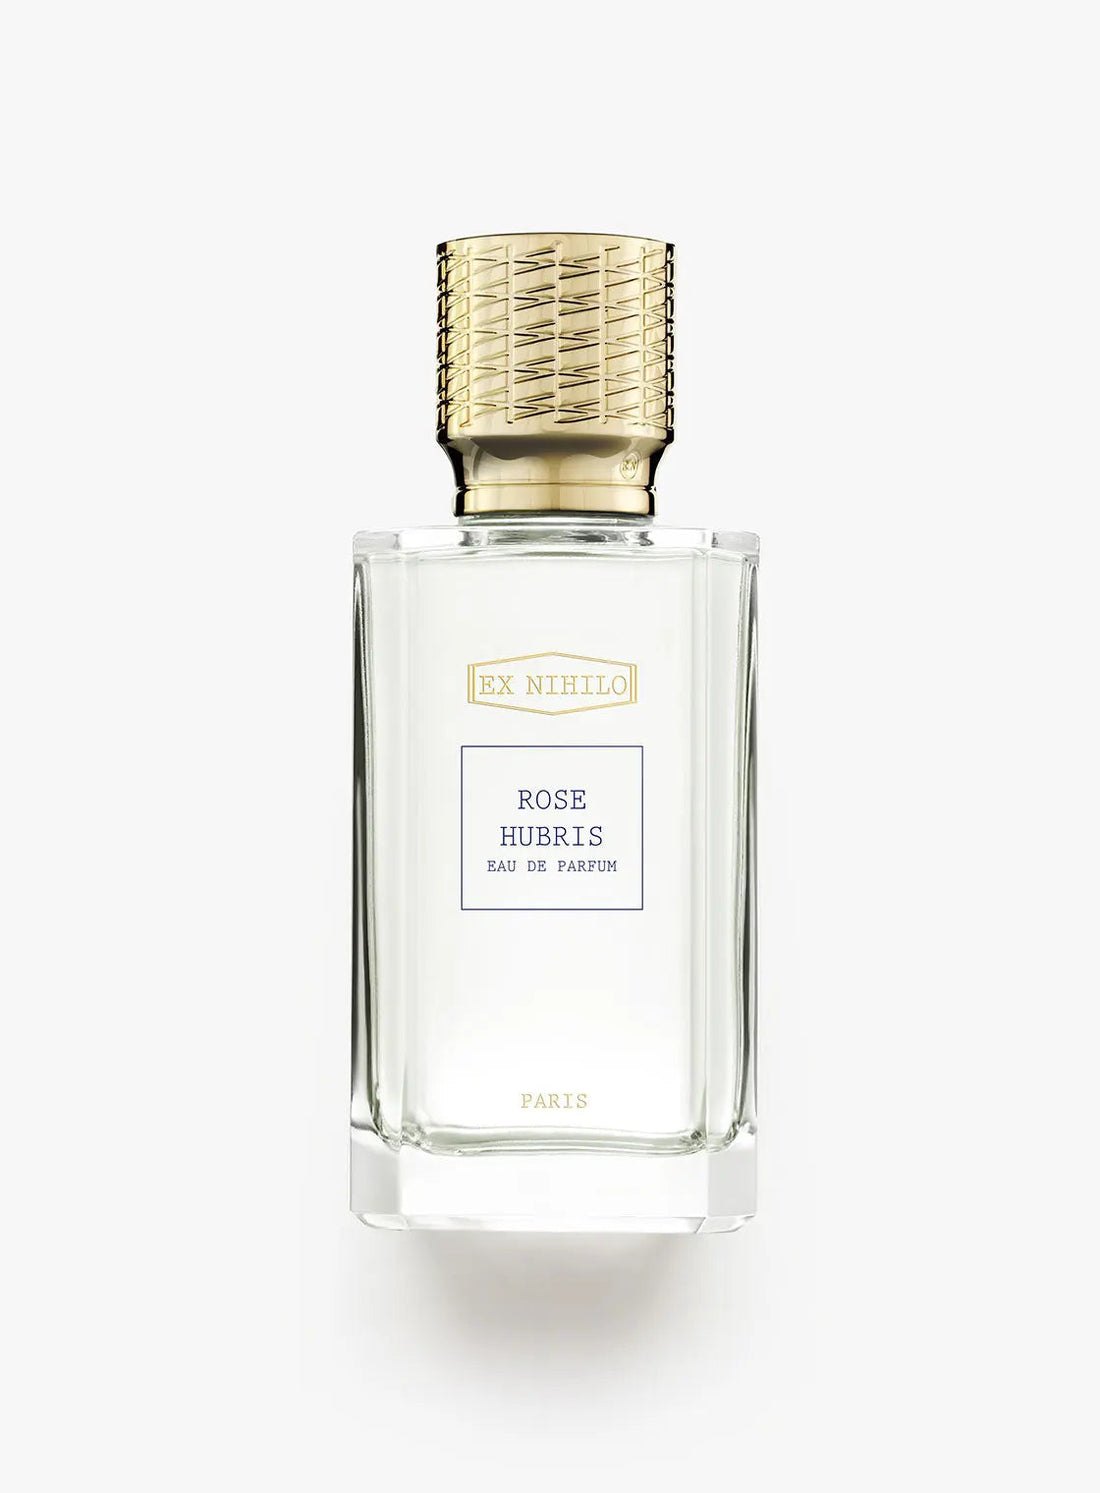 Ex nihilo Rose Hubris eau de parfum - 100 ml